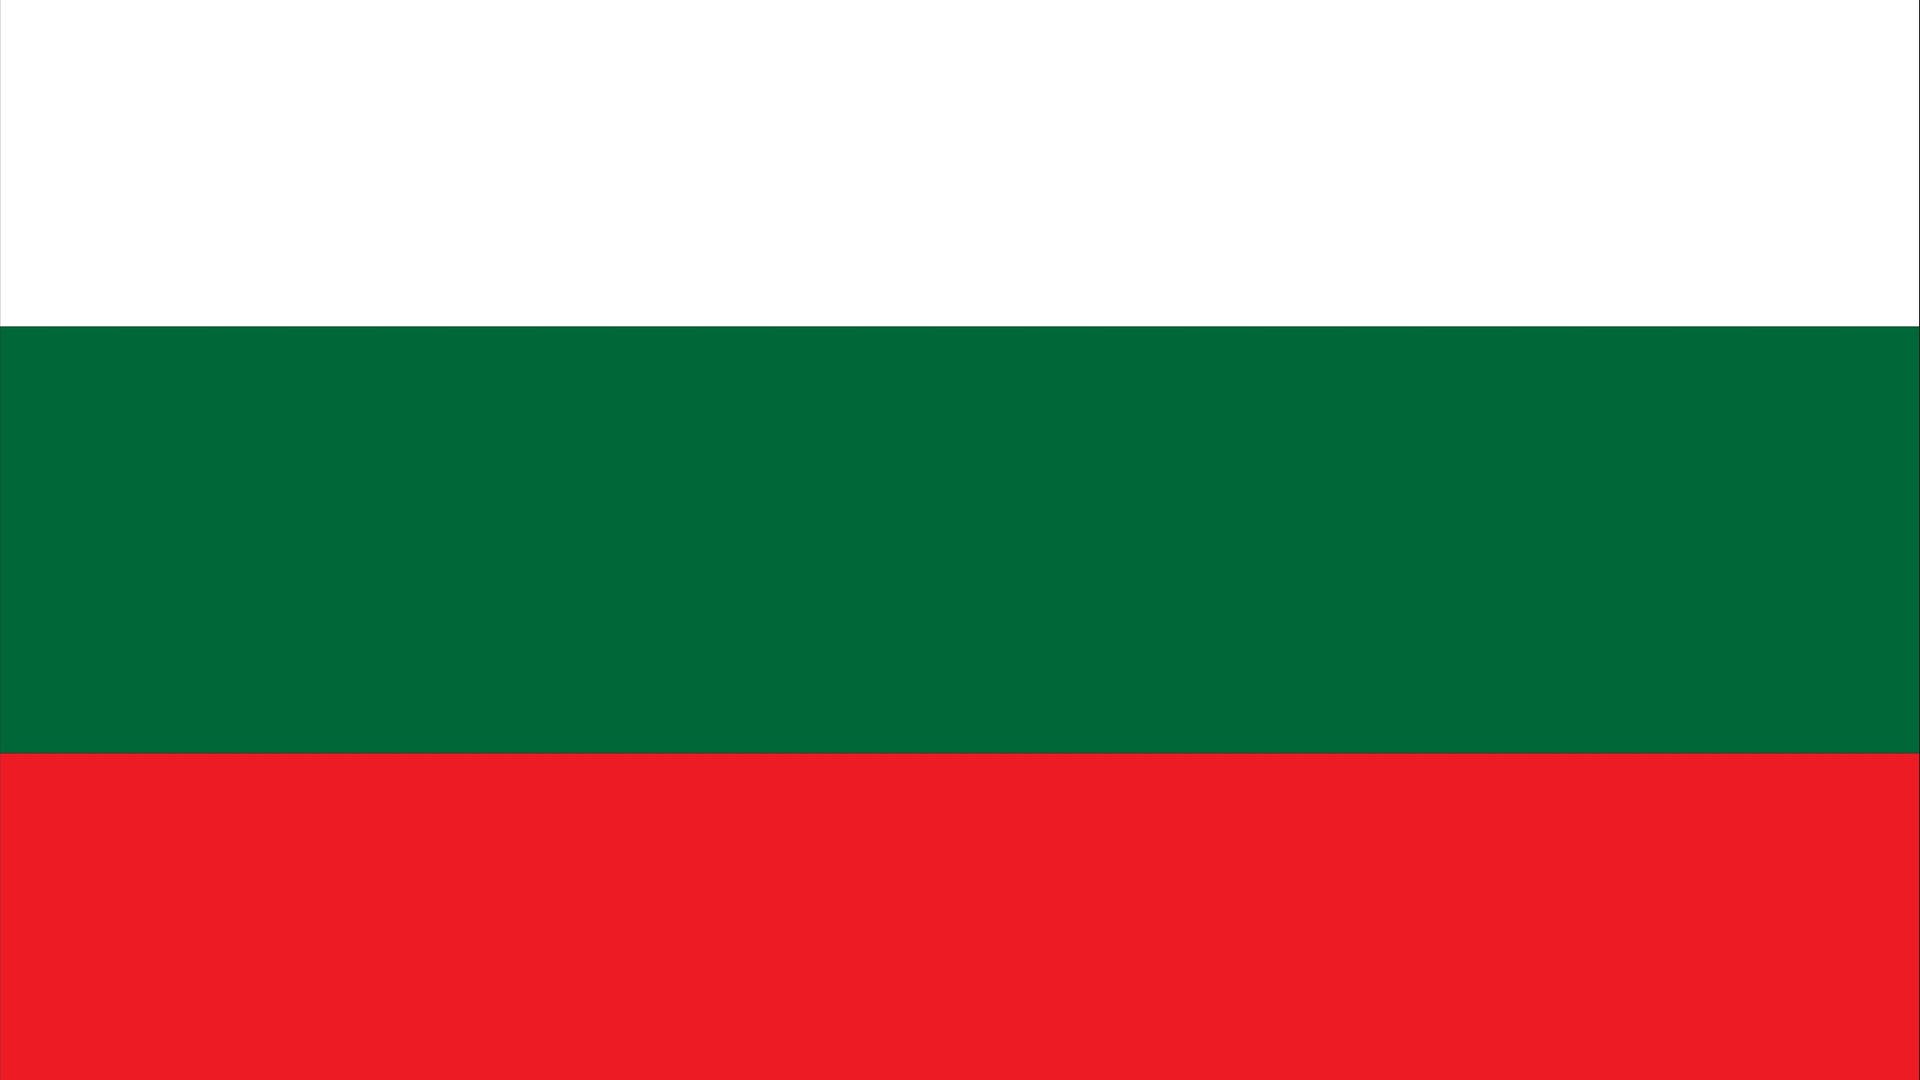 Bulgarien - Flagge